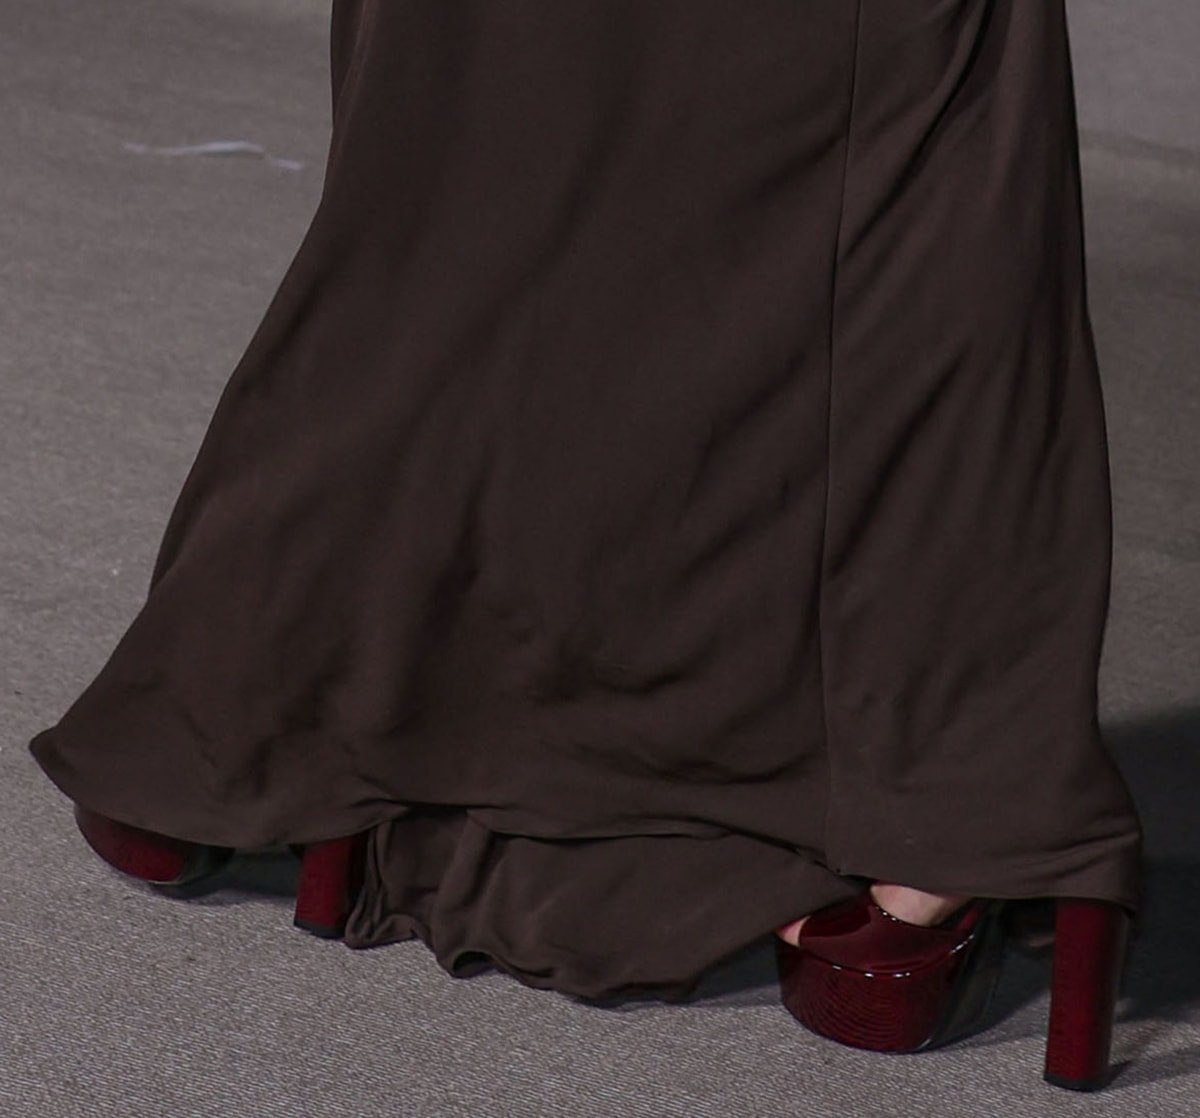 Hailey Bieber pairs her brown dress with burgundy patent platform sandals by Saint Laurent